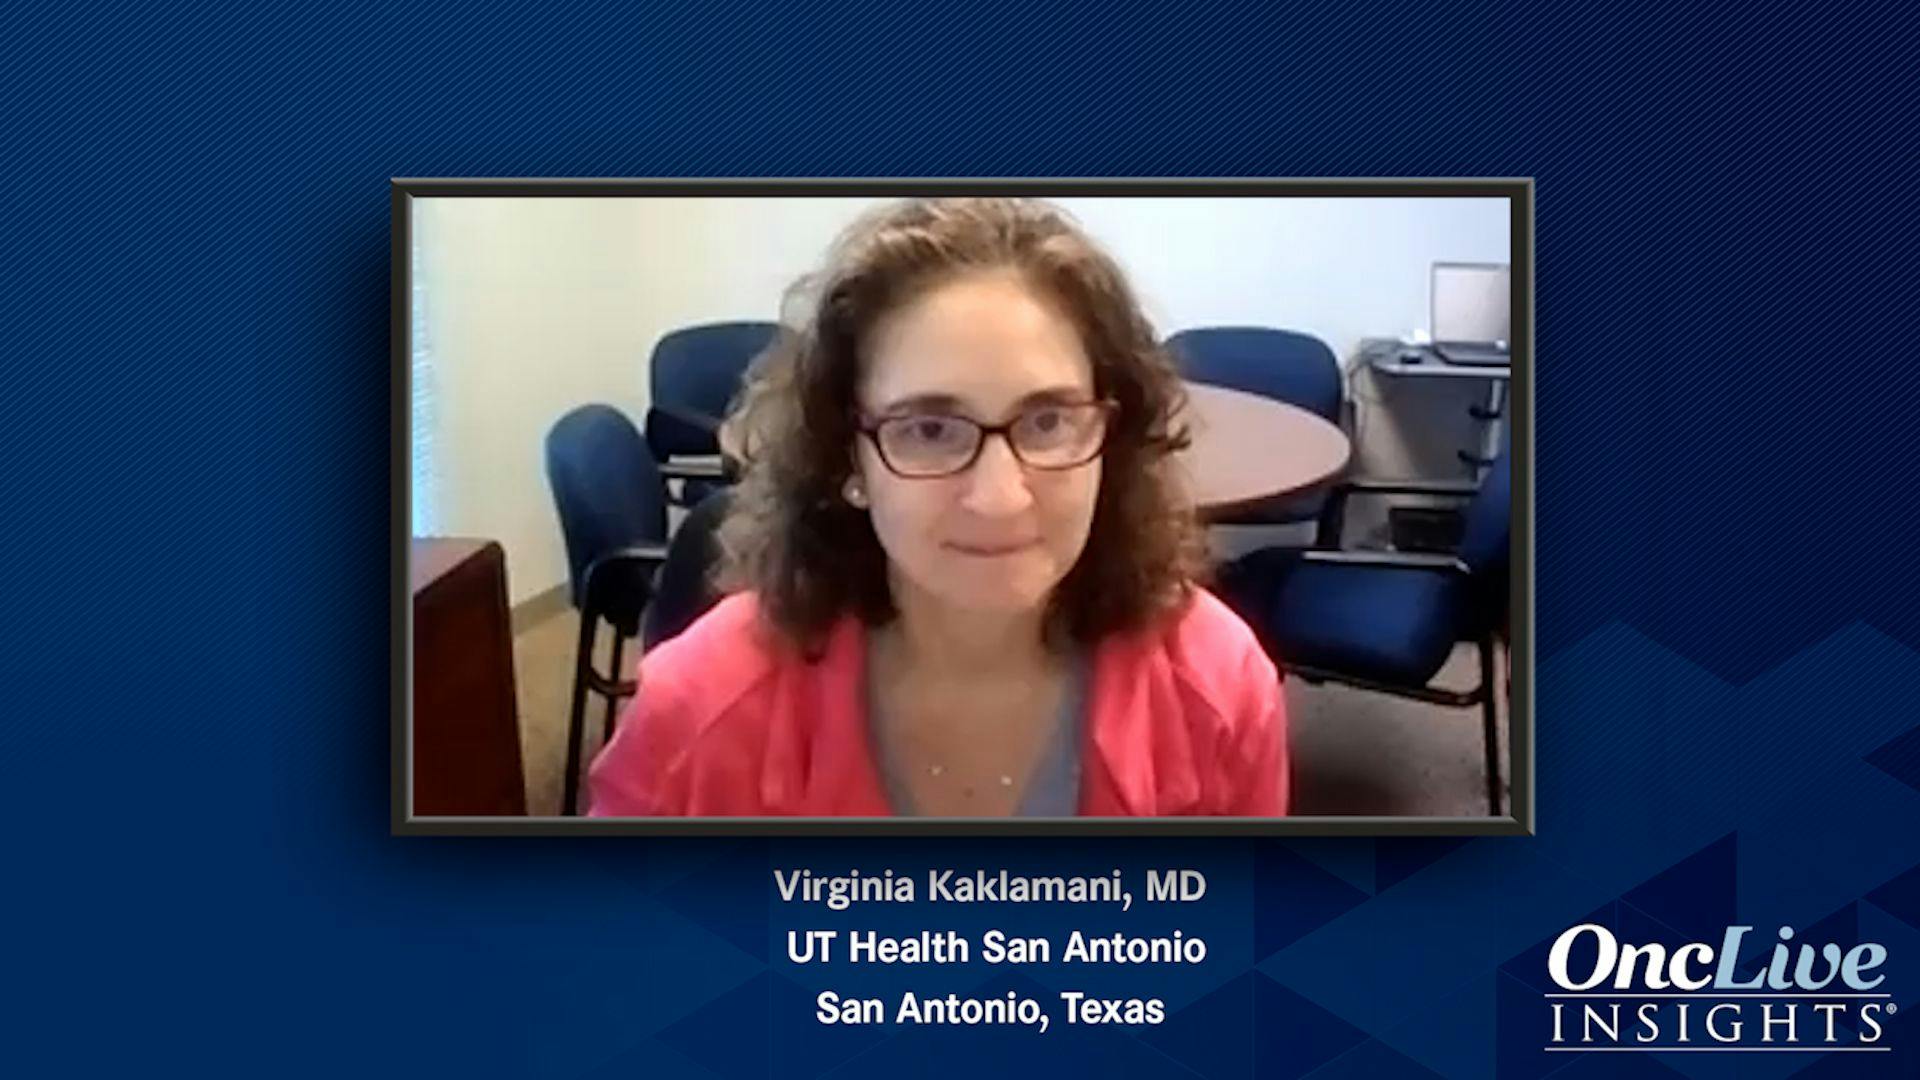 Virginia Kaklamani, MD, an expert on breast cancer